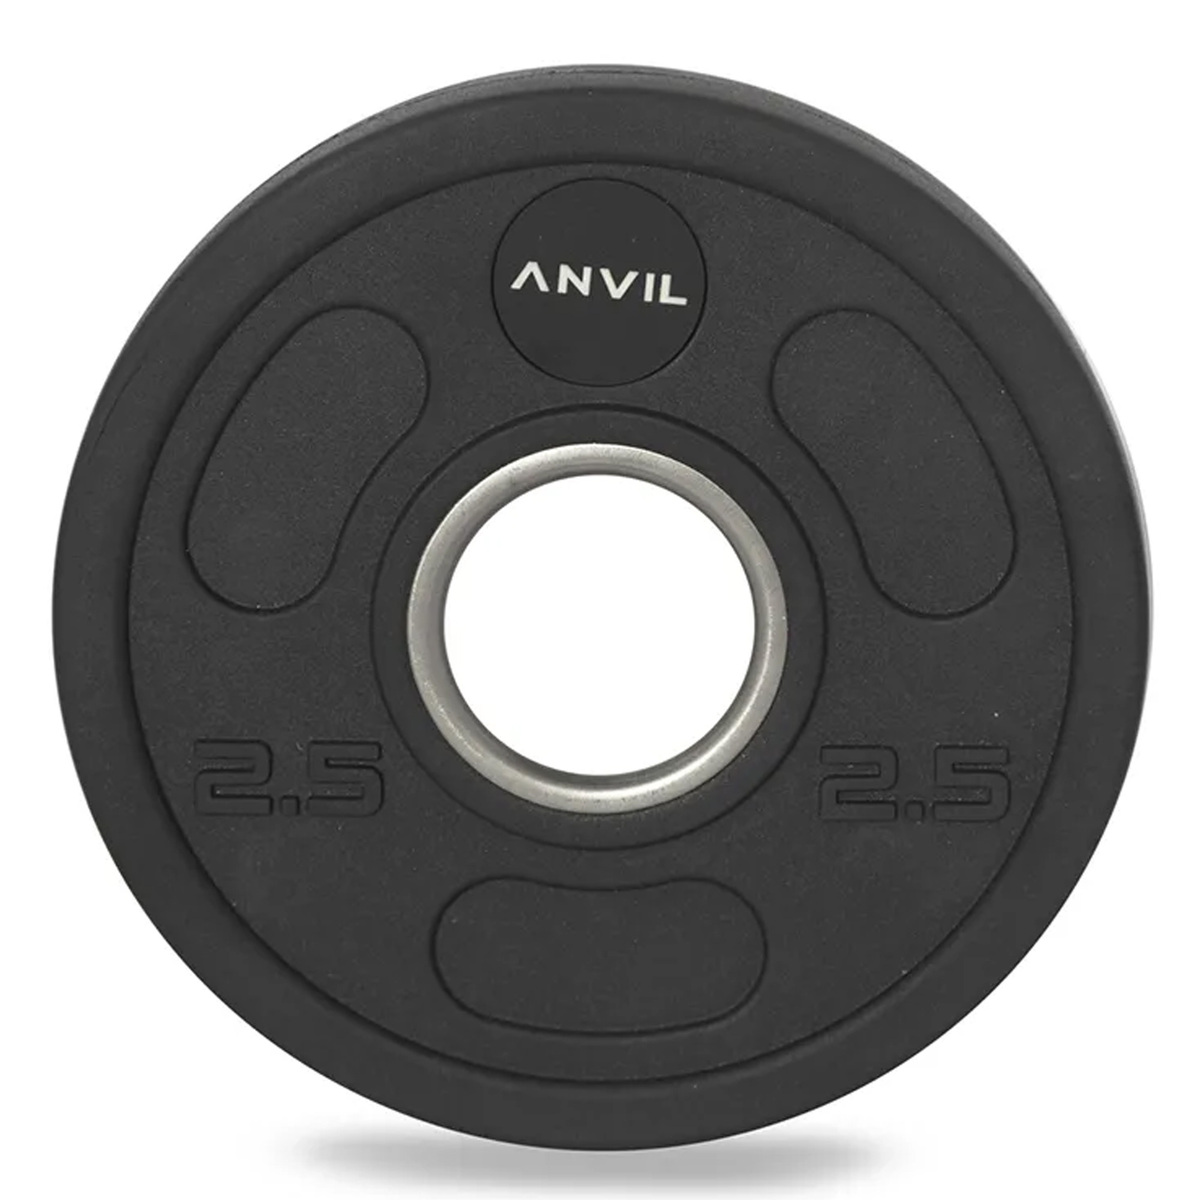 Anvil Olympic Rubber Plate, 2.5 kg, Black, ANV-RUB-BLA-2-5KG